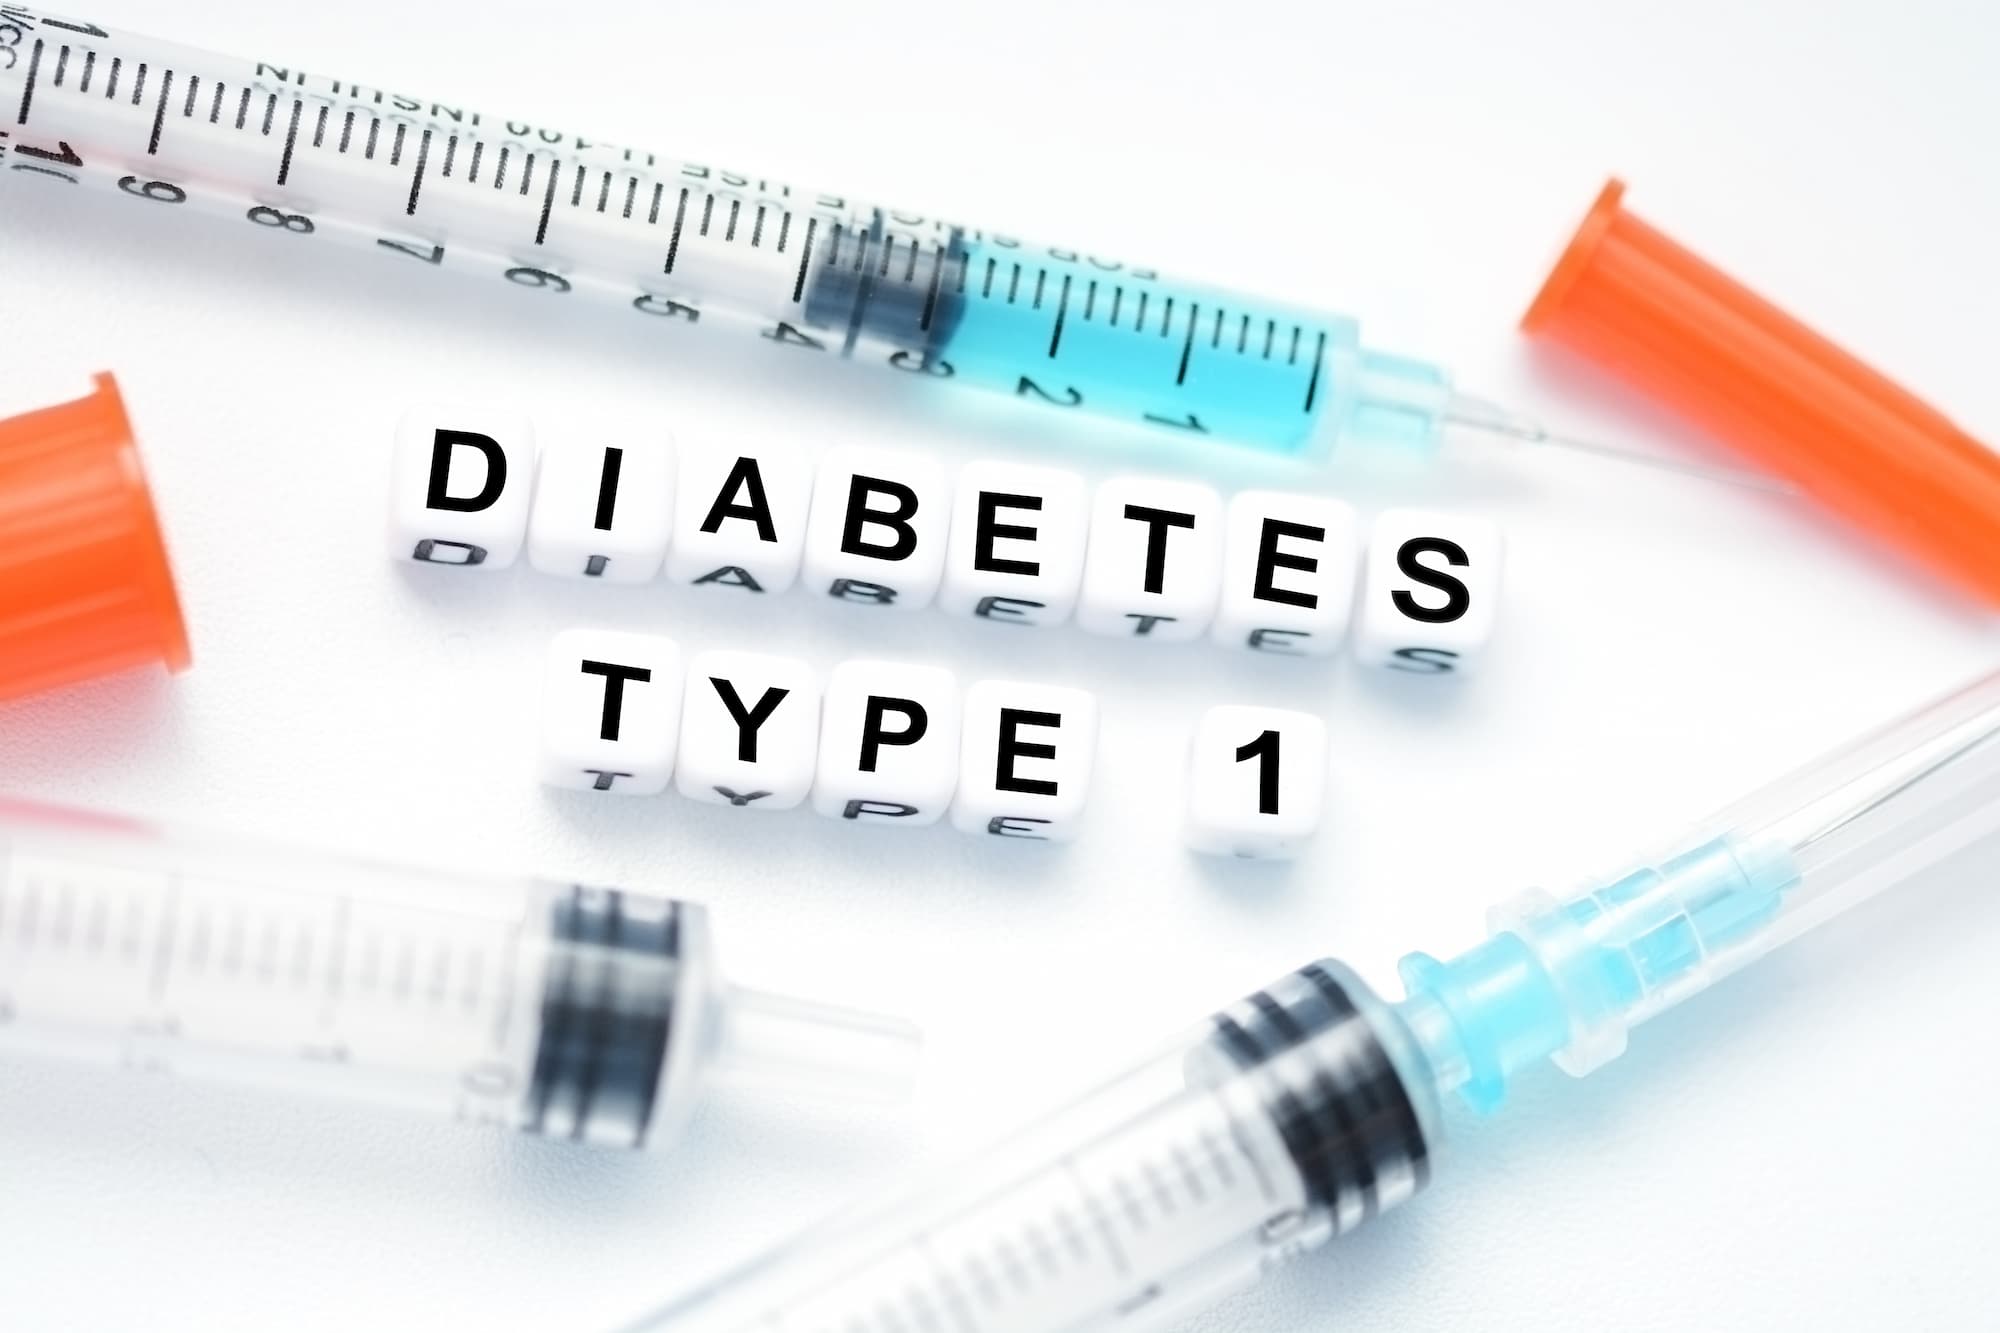 type-1-diabetes-rises-during-pandemic-medenvios-healthcare